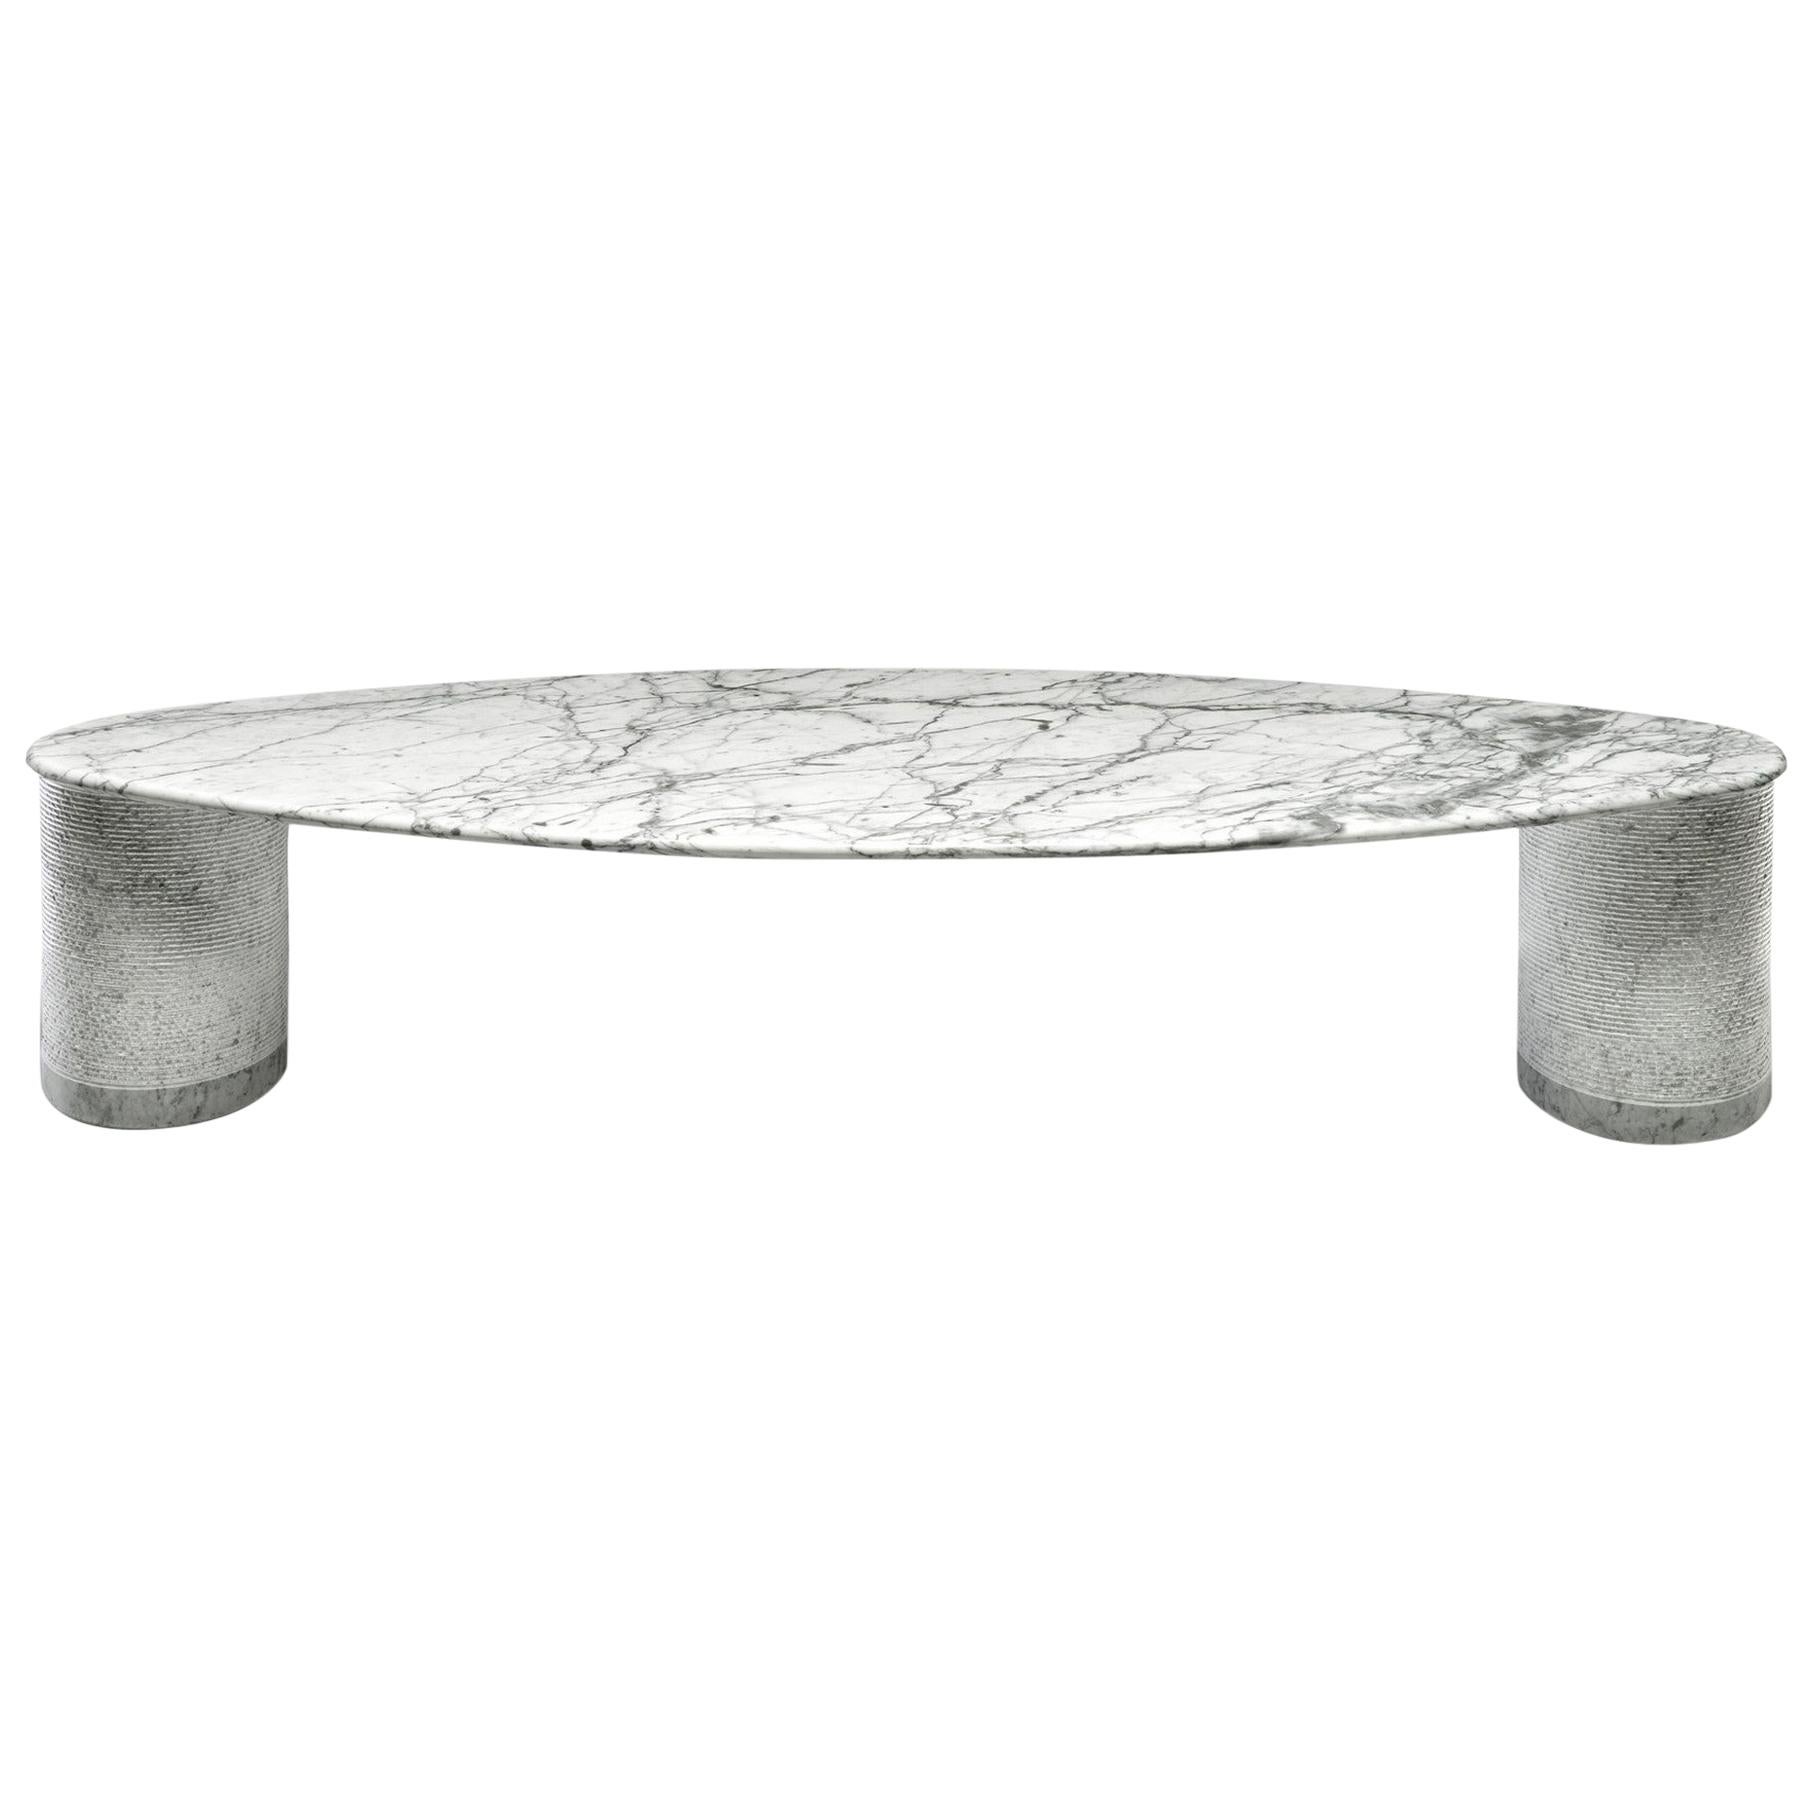 Lazzotti Estremista Cocktail Table Carrara Marble Official Re-Edition